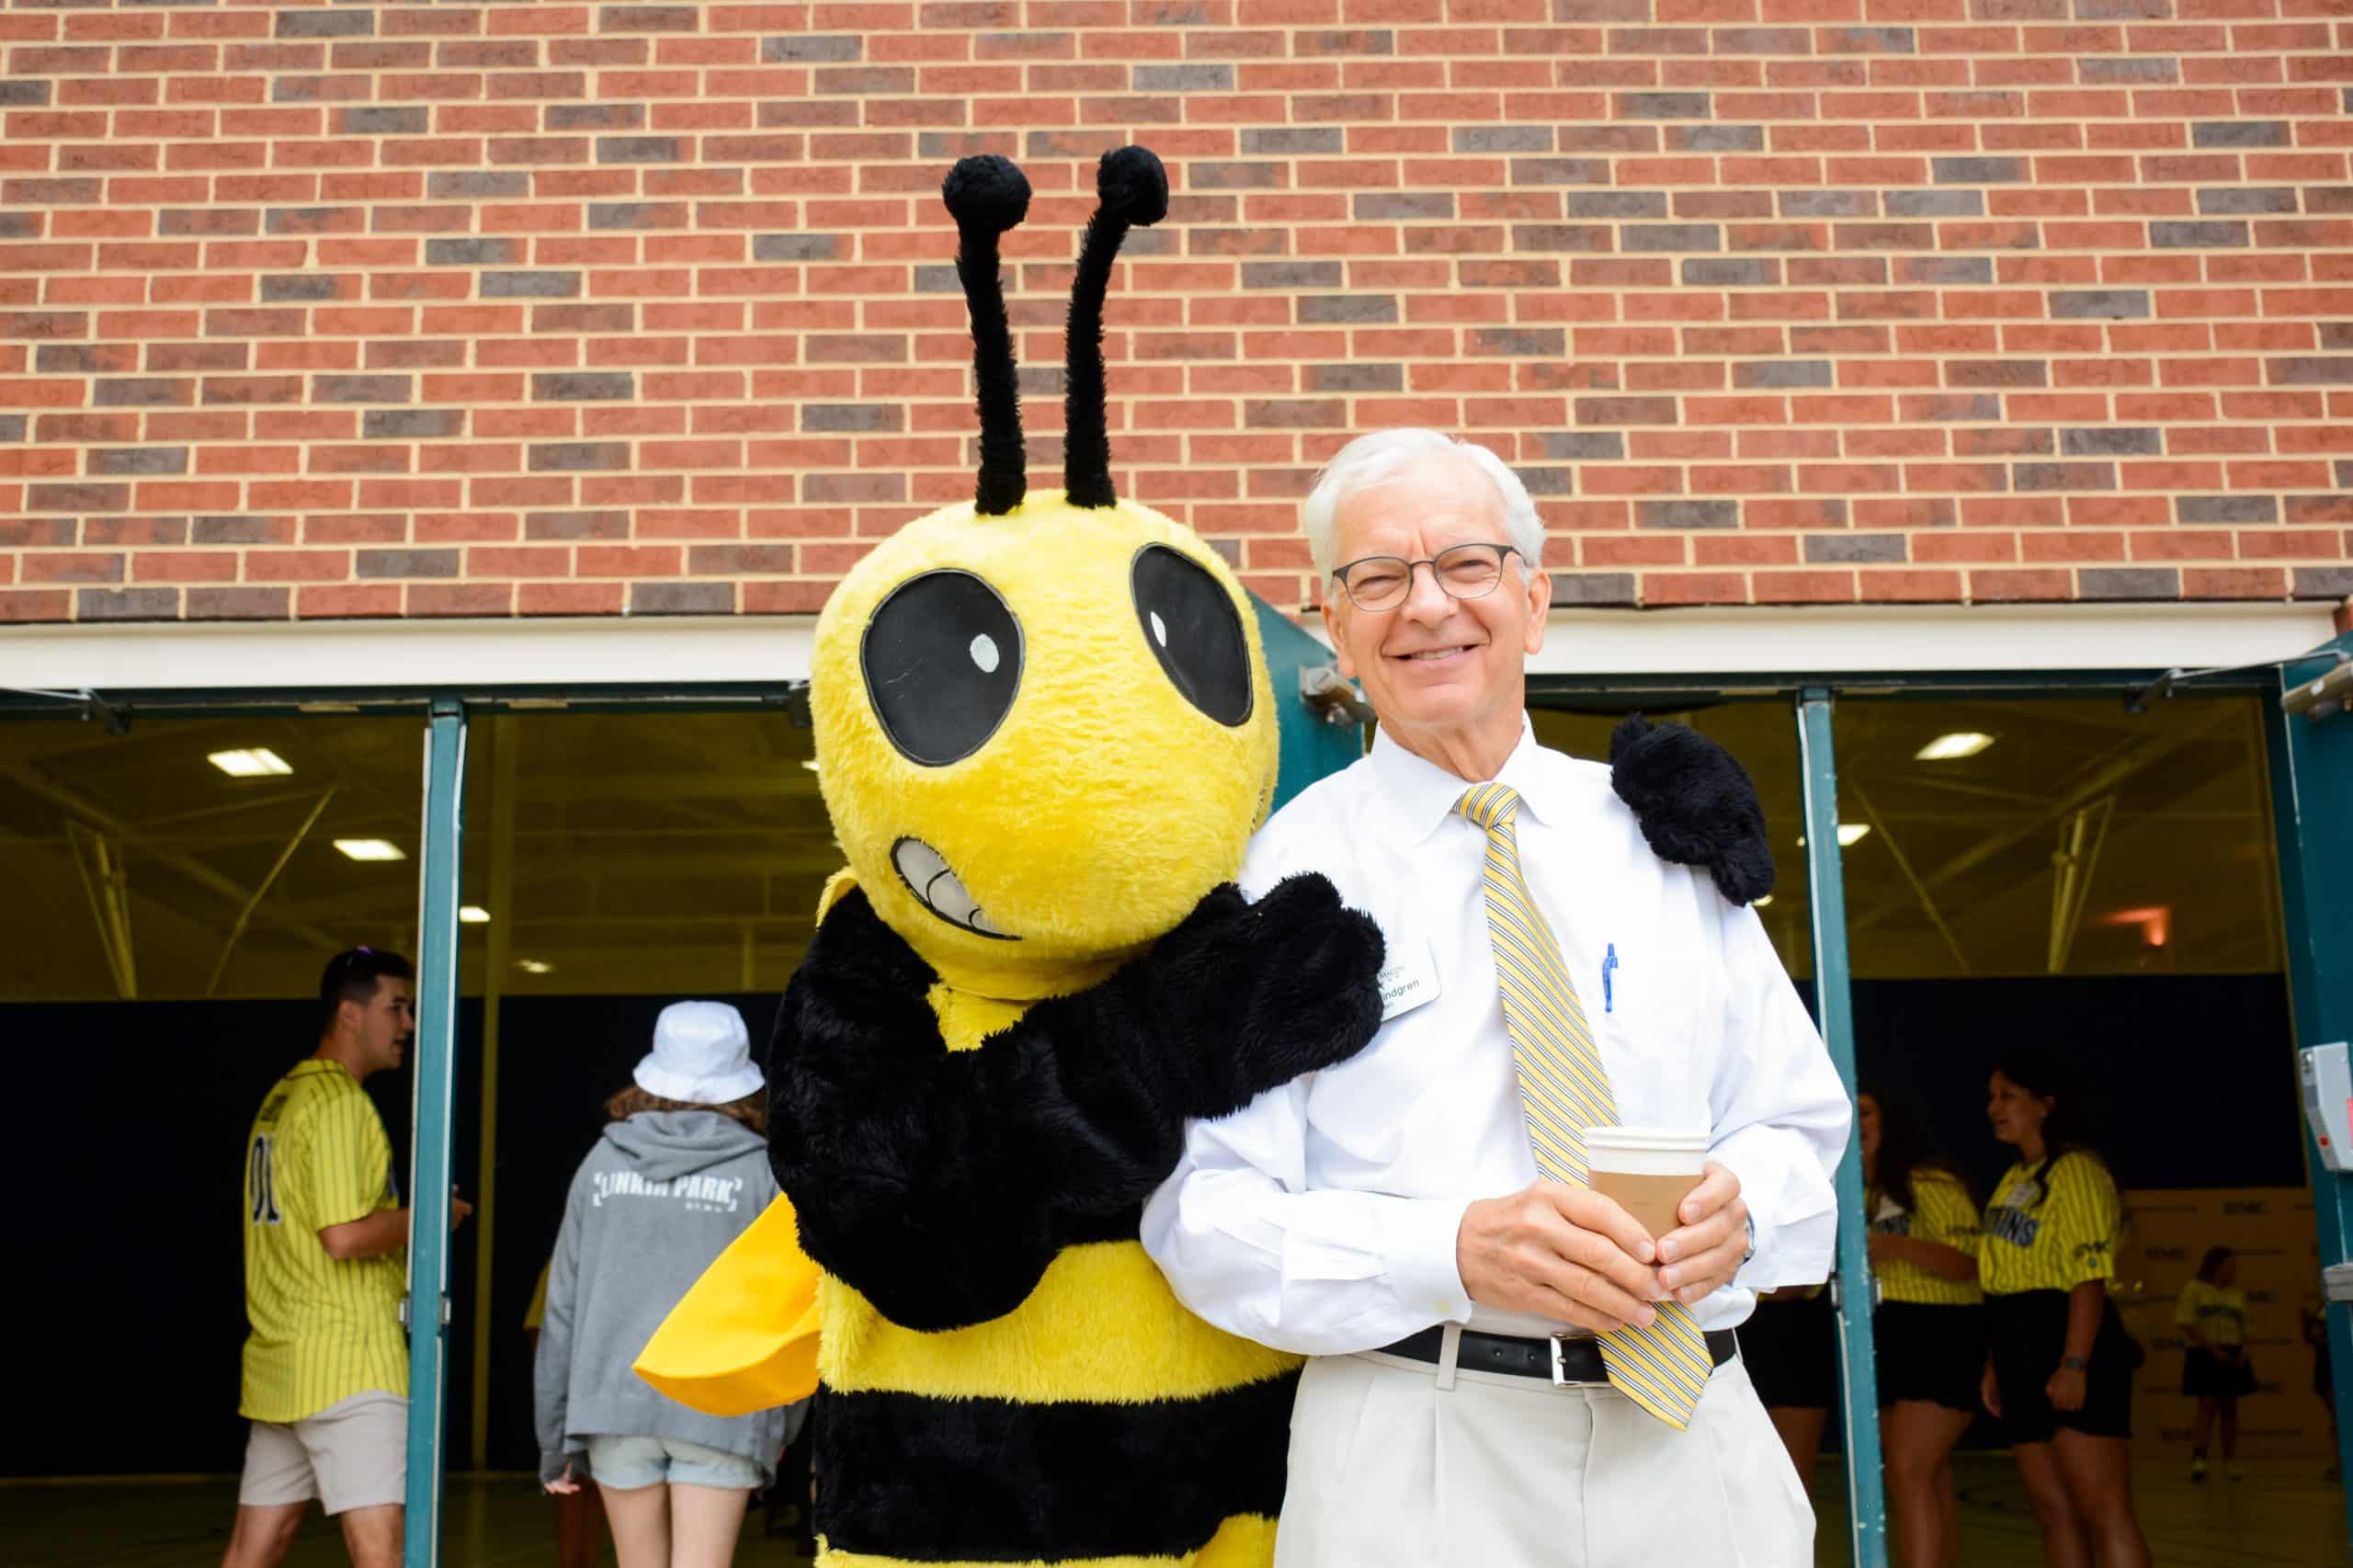 President Lindgren hugs Buzz mascot in front of a building.